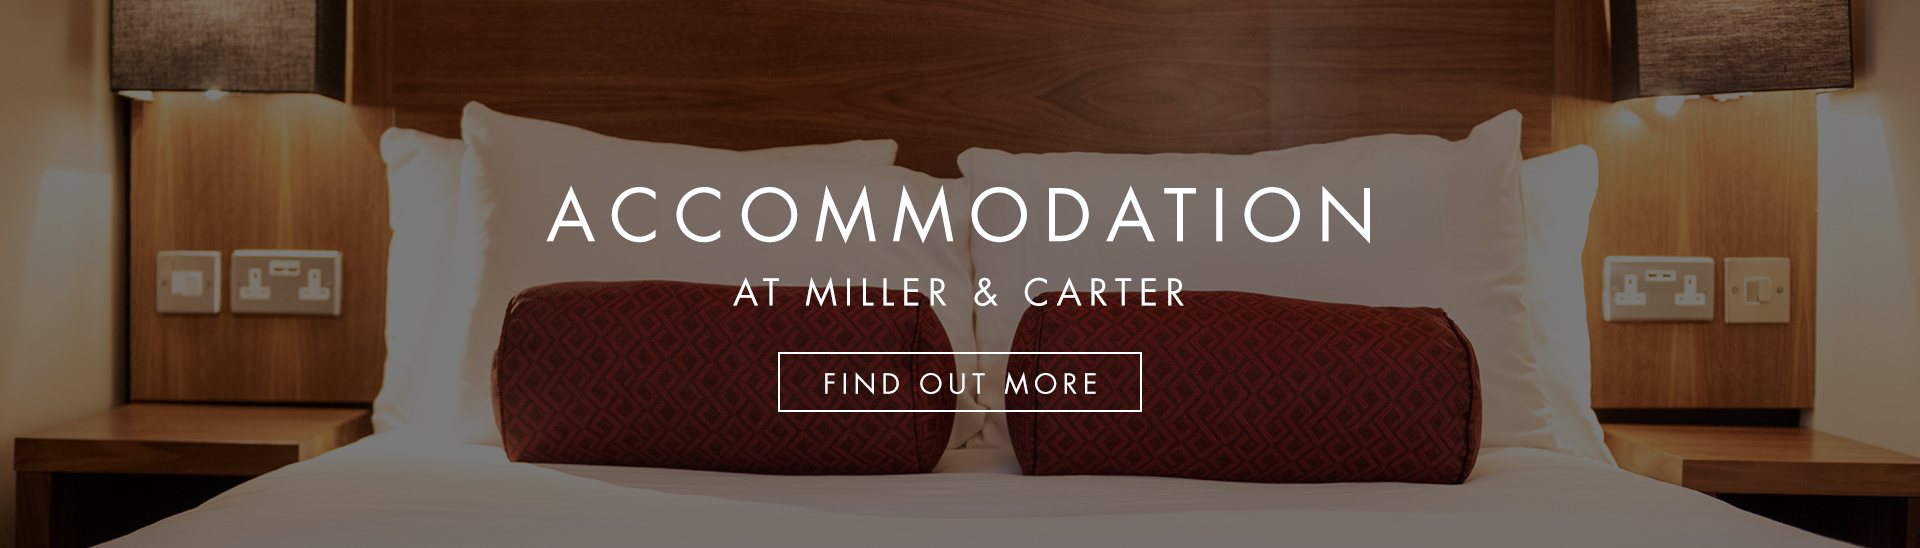 Accommodation at Miller & Carter Brighton